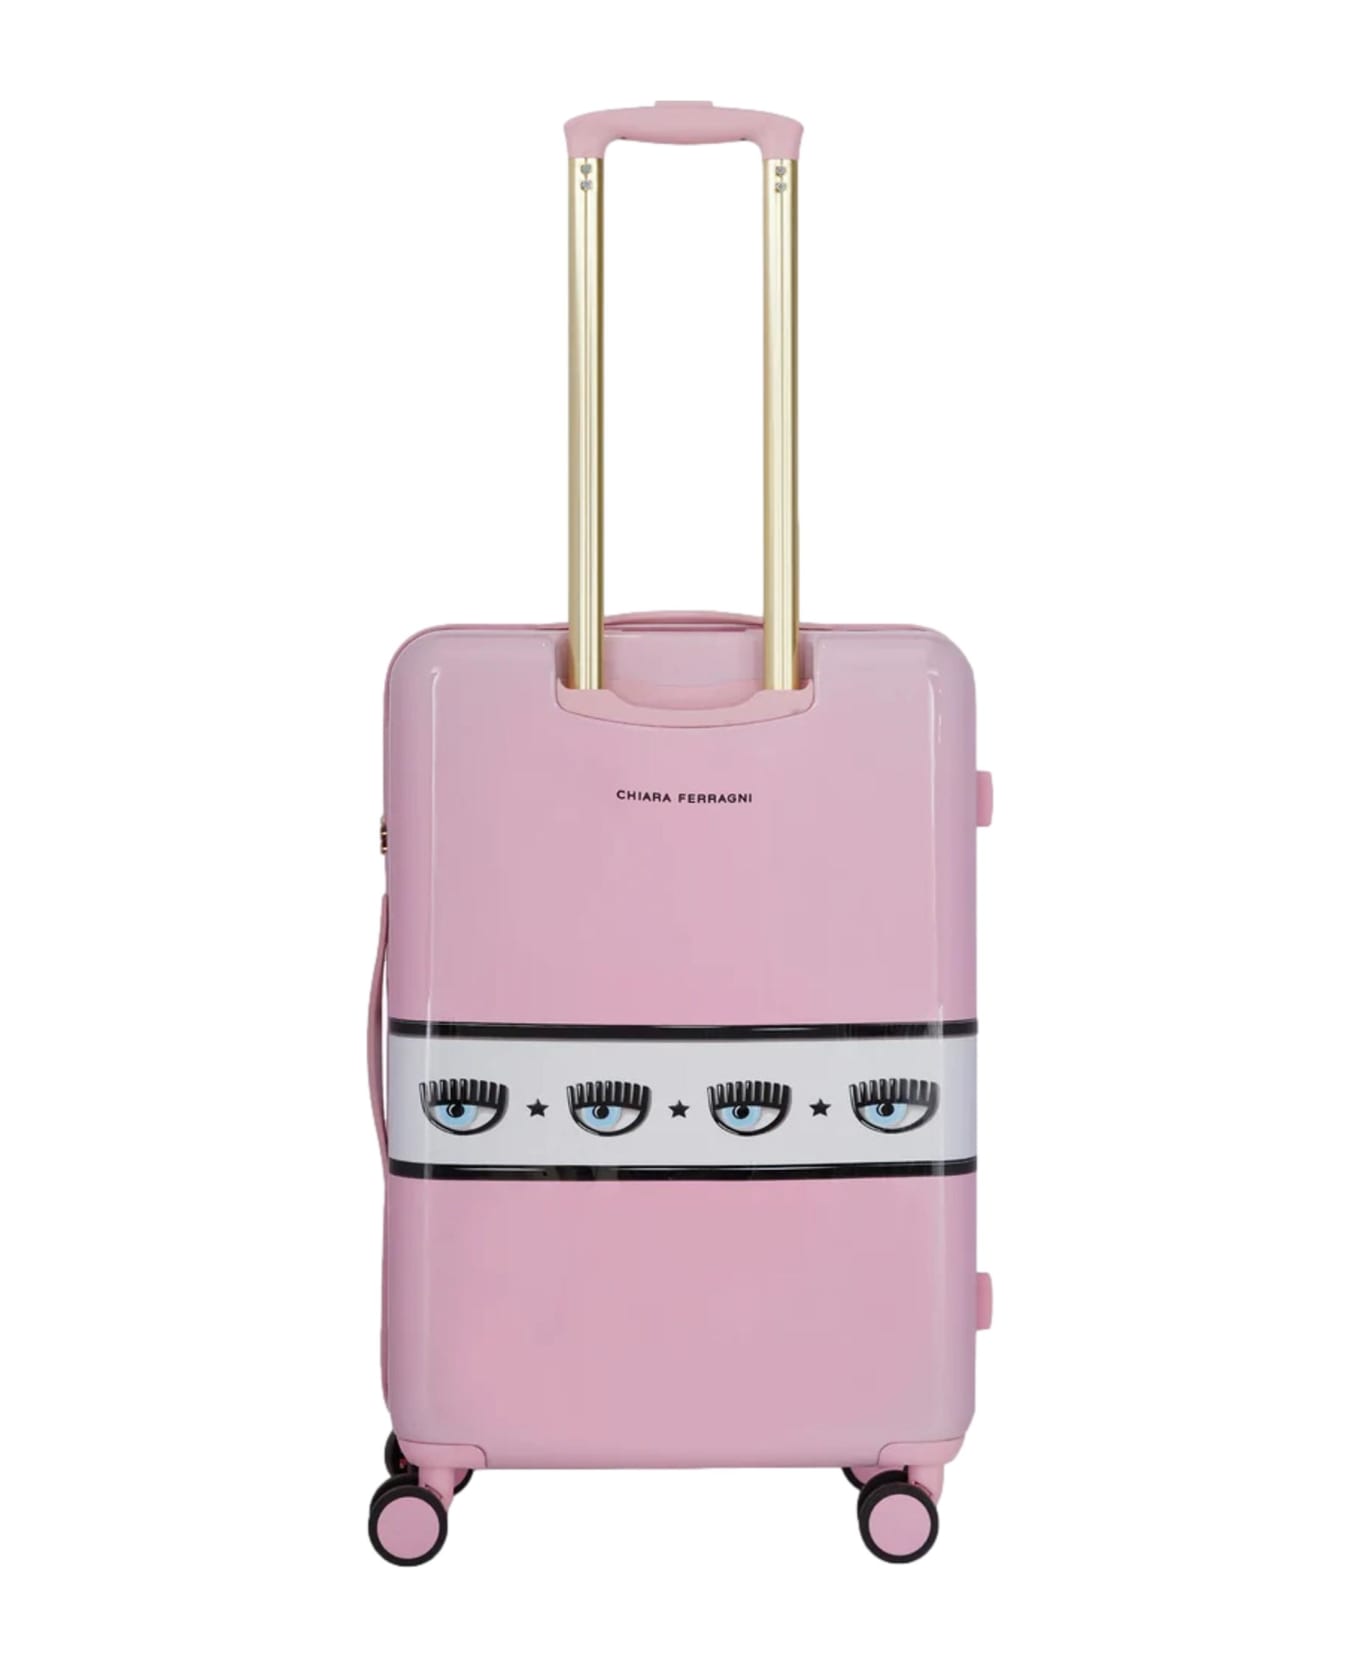 Chiara Ferragni Suitcases Pink - Pink